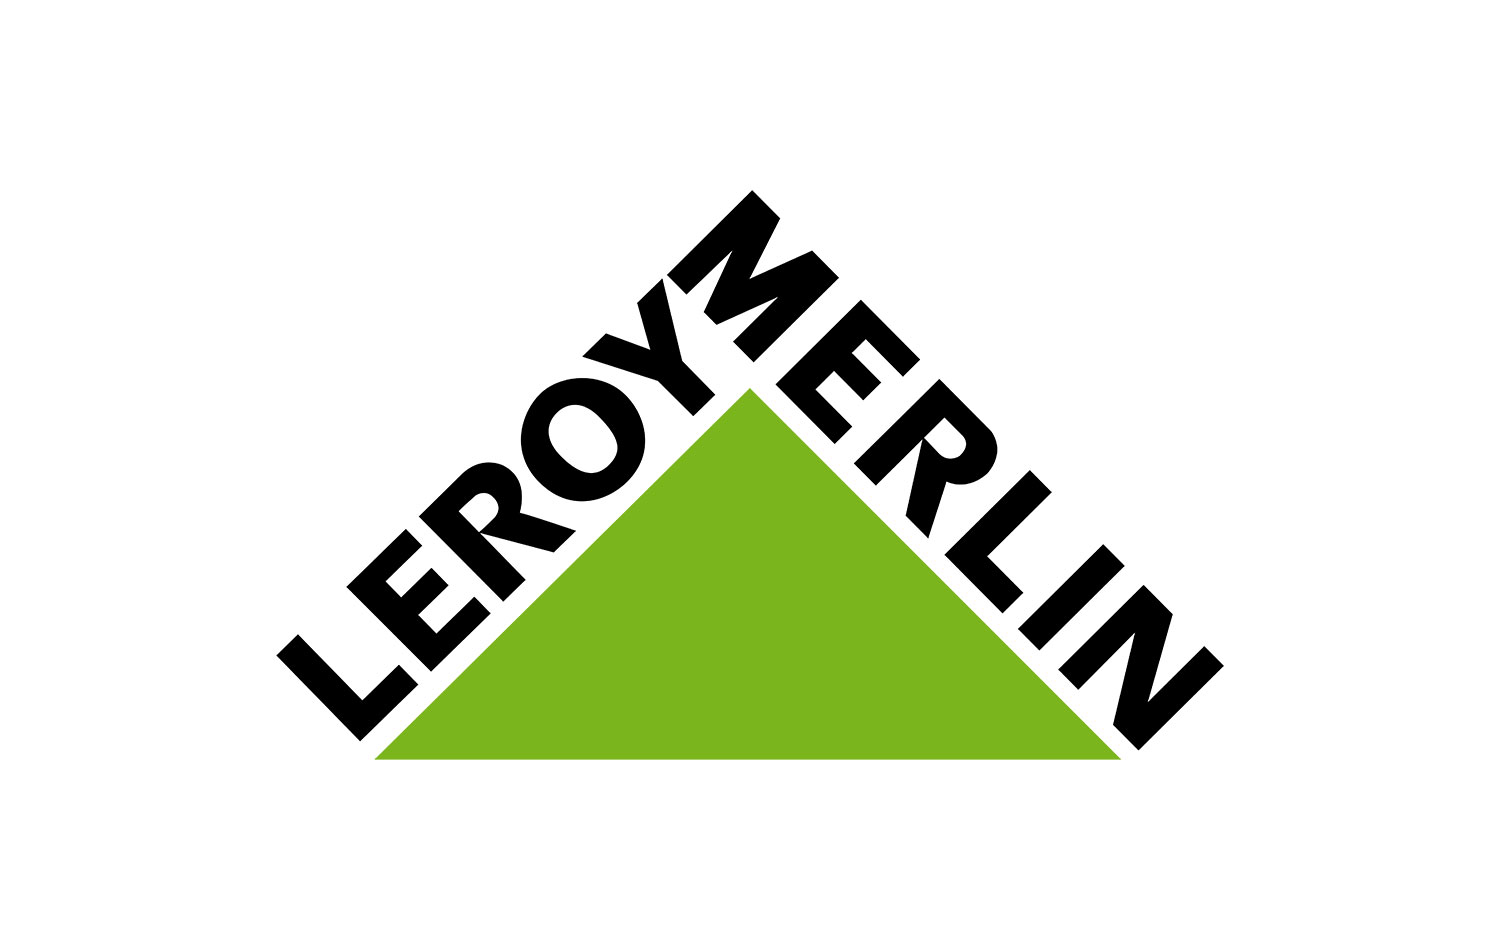 Leroy Merlin 乐华梅兰品牌视觉（概念版）